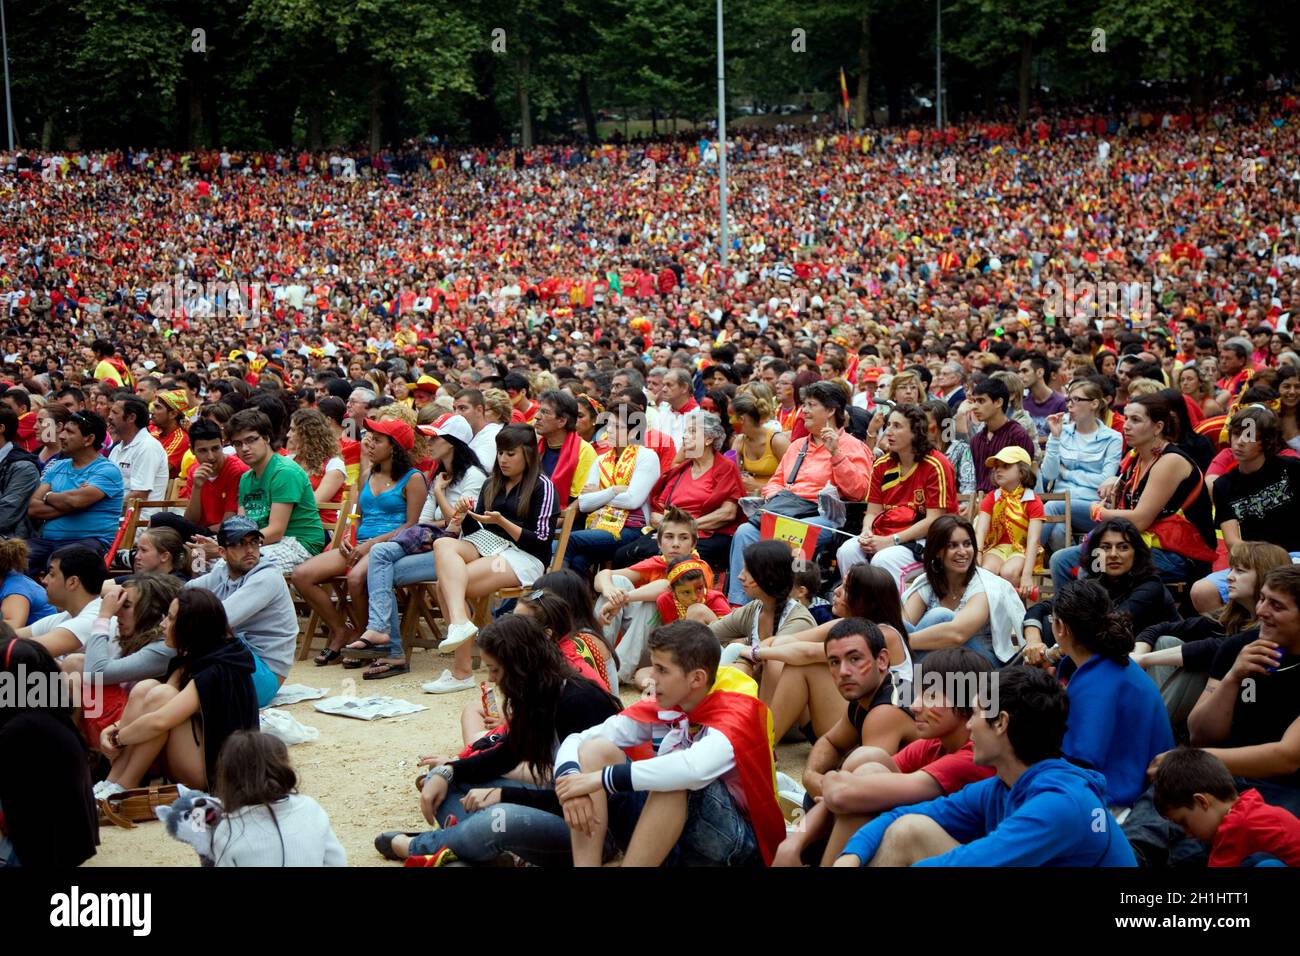 VIGO, SPAIN - JULY 11: Spanish fans during the FIFA Soccer World Cup final game, July 11, 2010 in Vigo, Spain Stock Photo